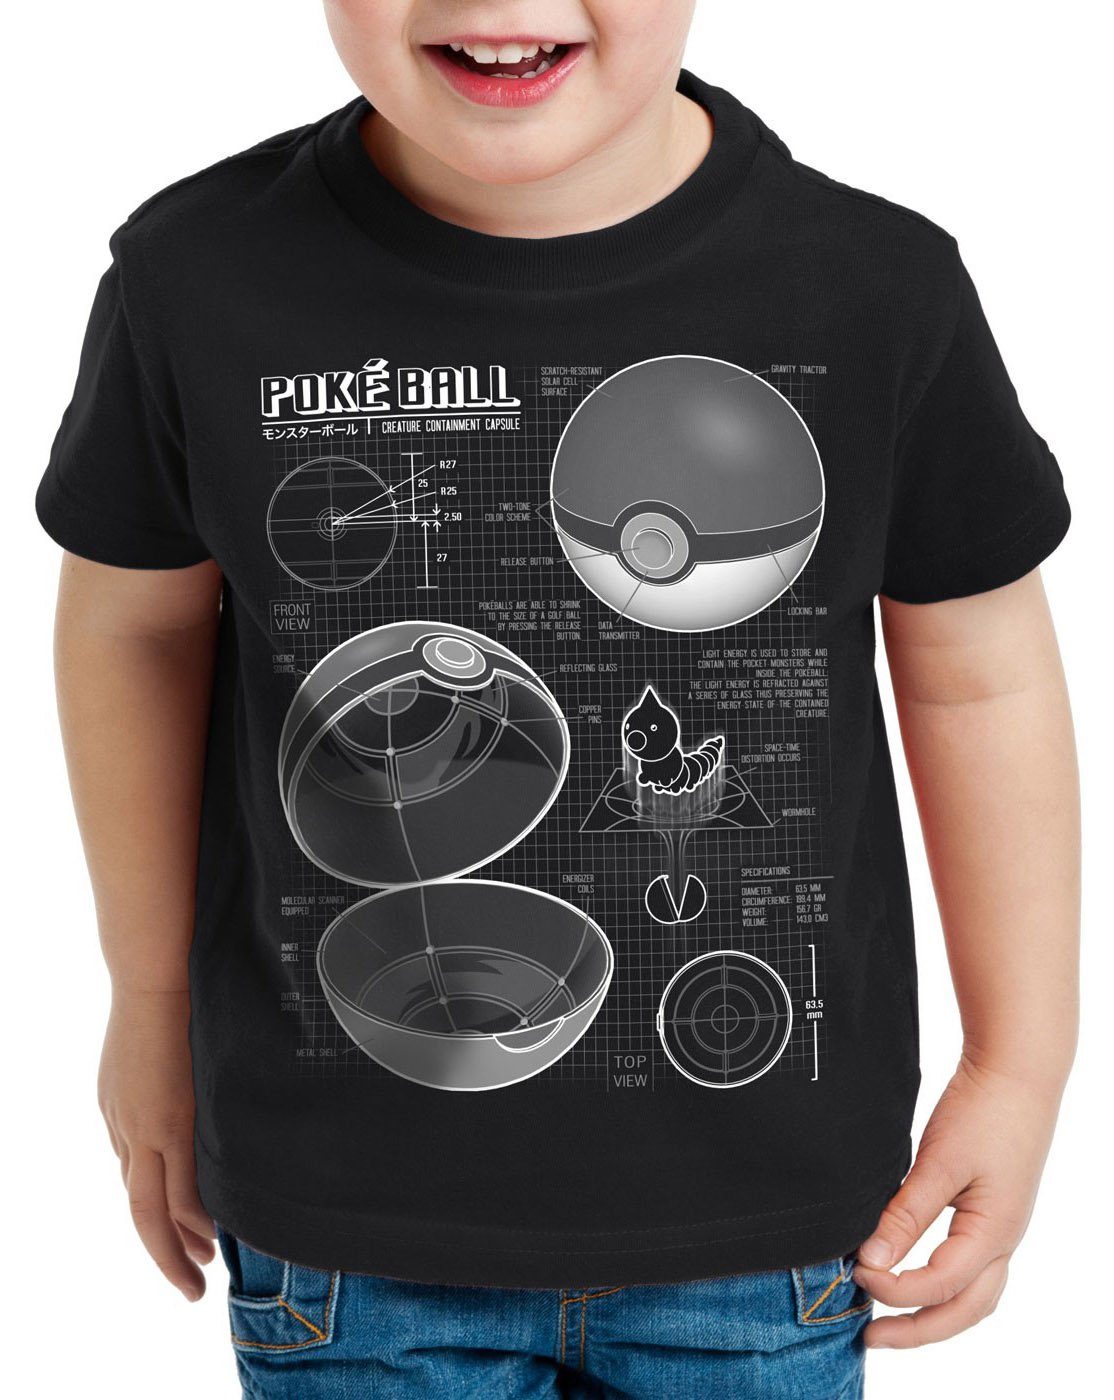 Print-Shirt Kinder style3 Blaupause Pokéball monster T-Shirt spiel schwarz online